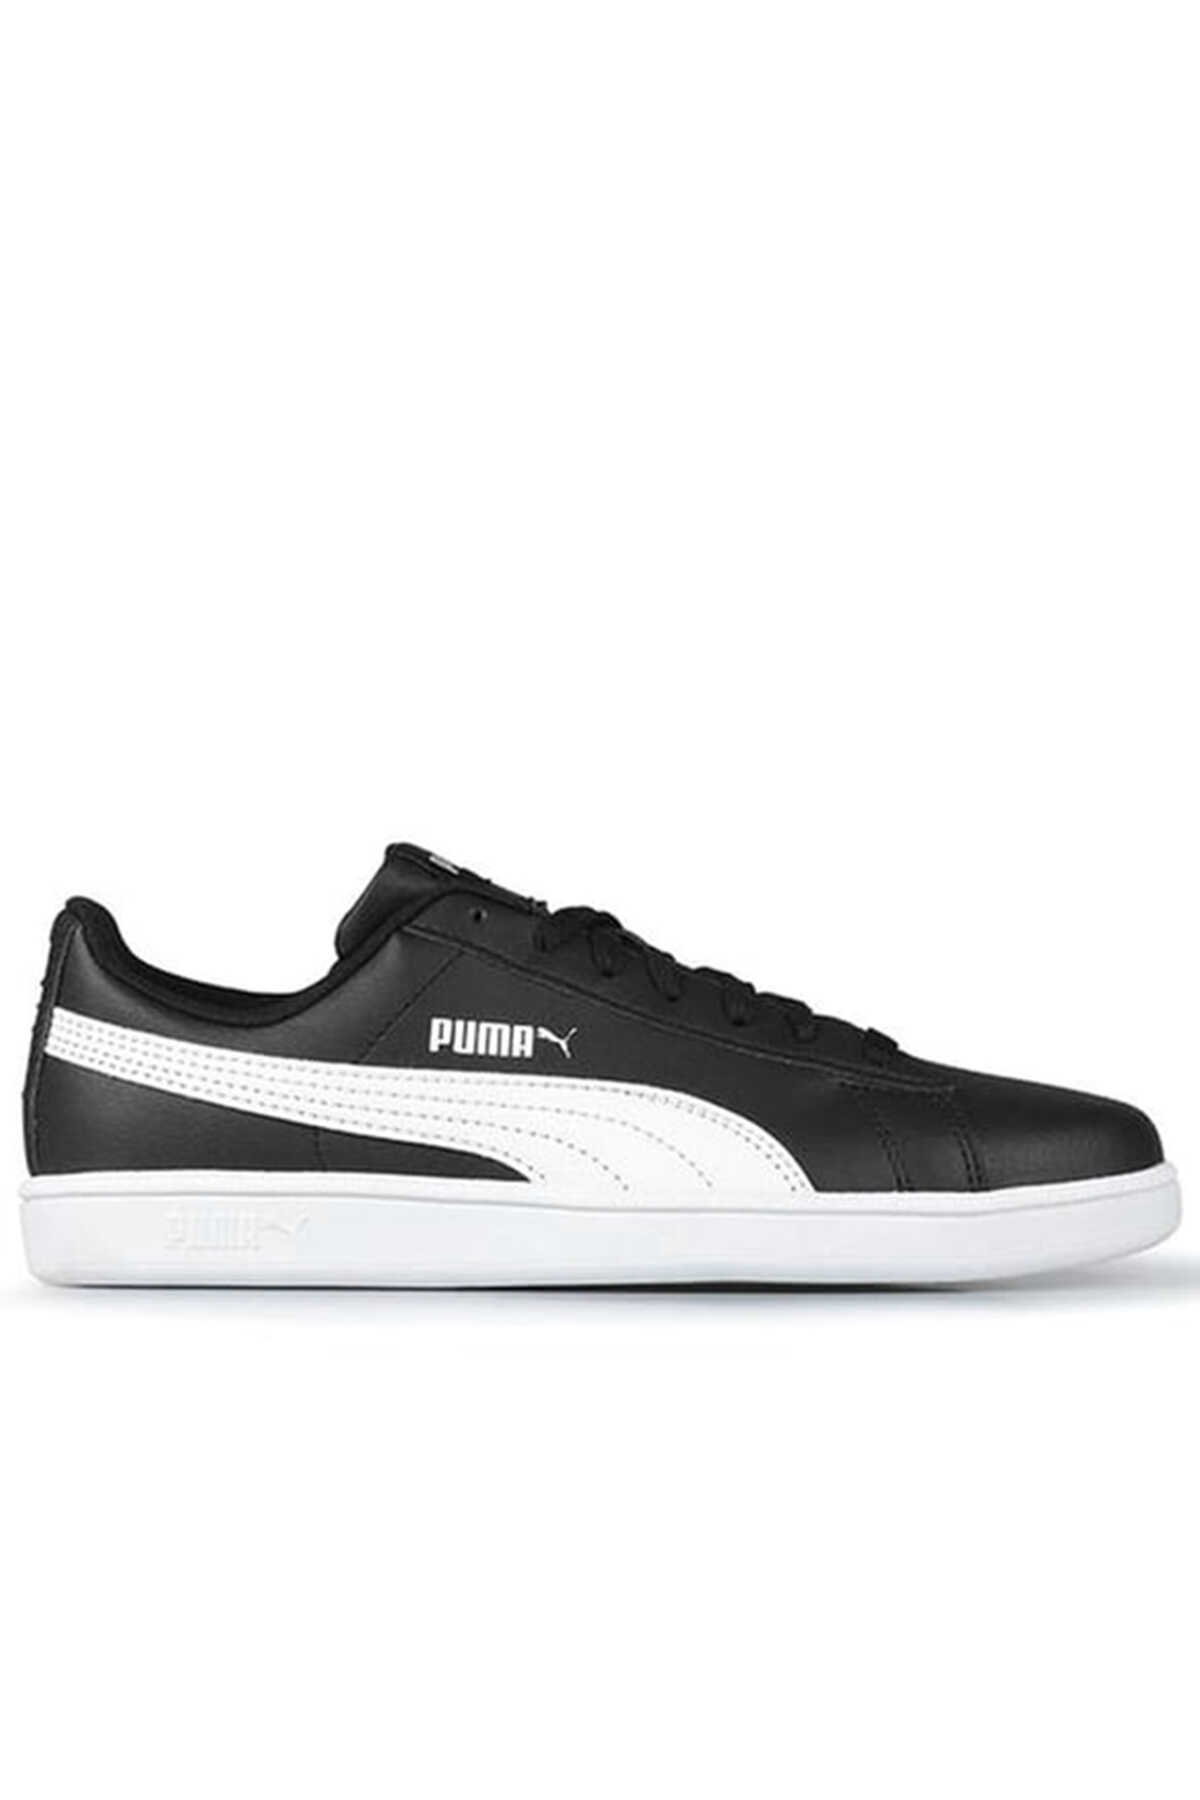 Puma - Puma Puma Up Unisex Sneaker Ayakkabı Siyah / Beyaz